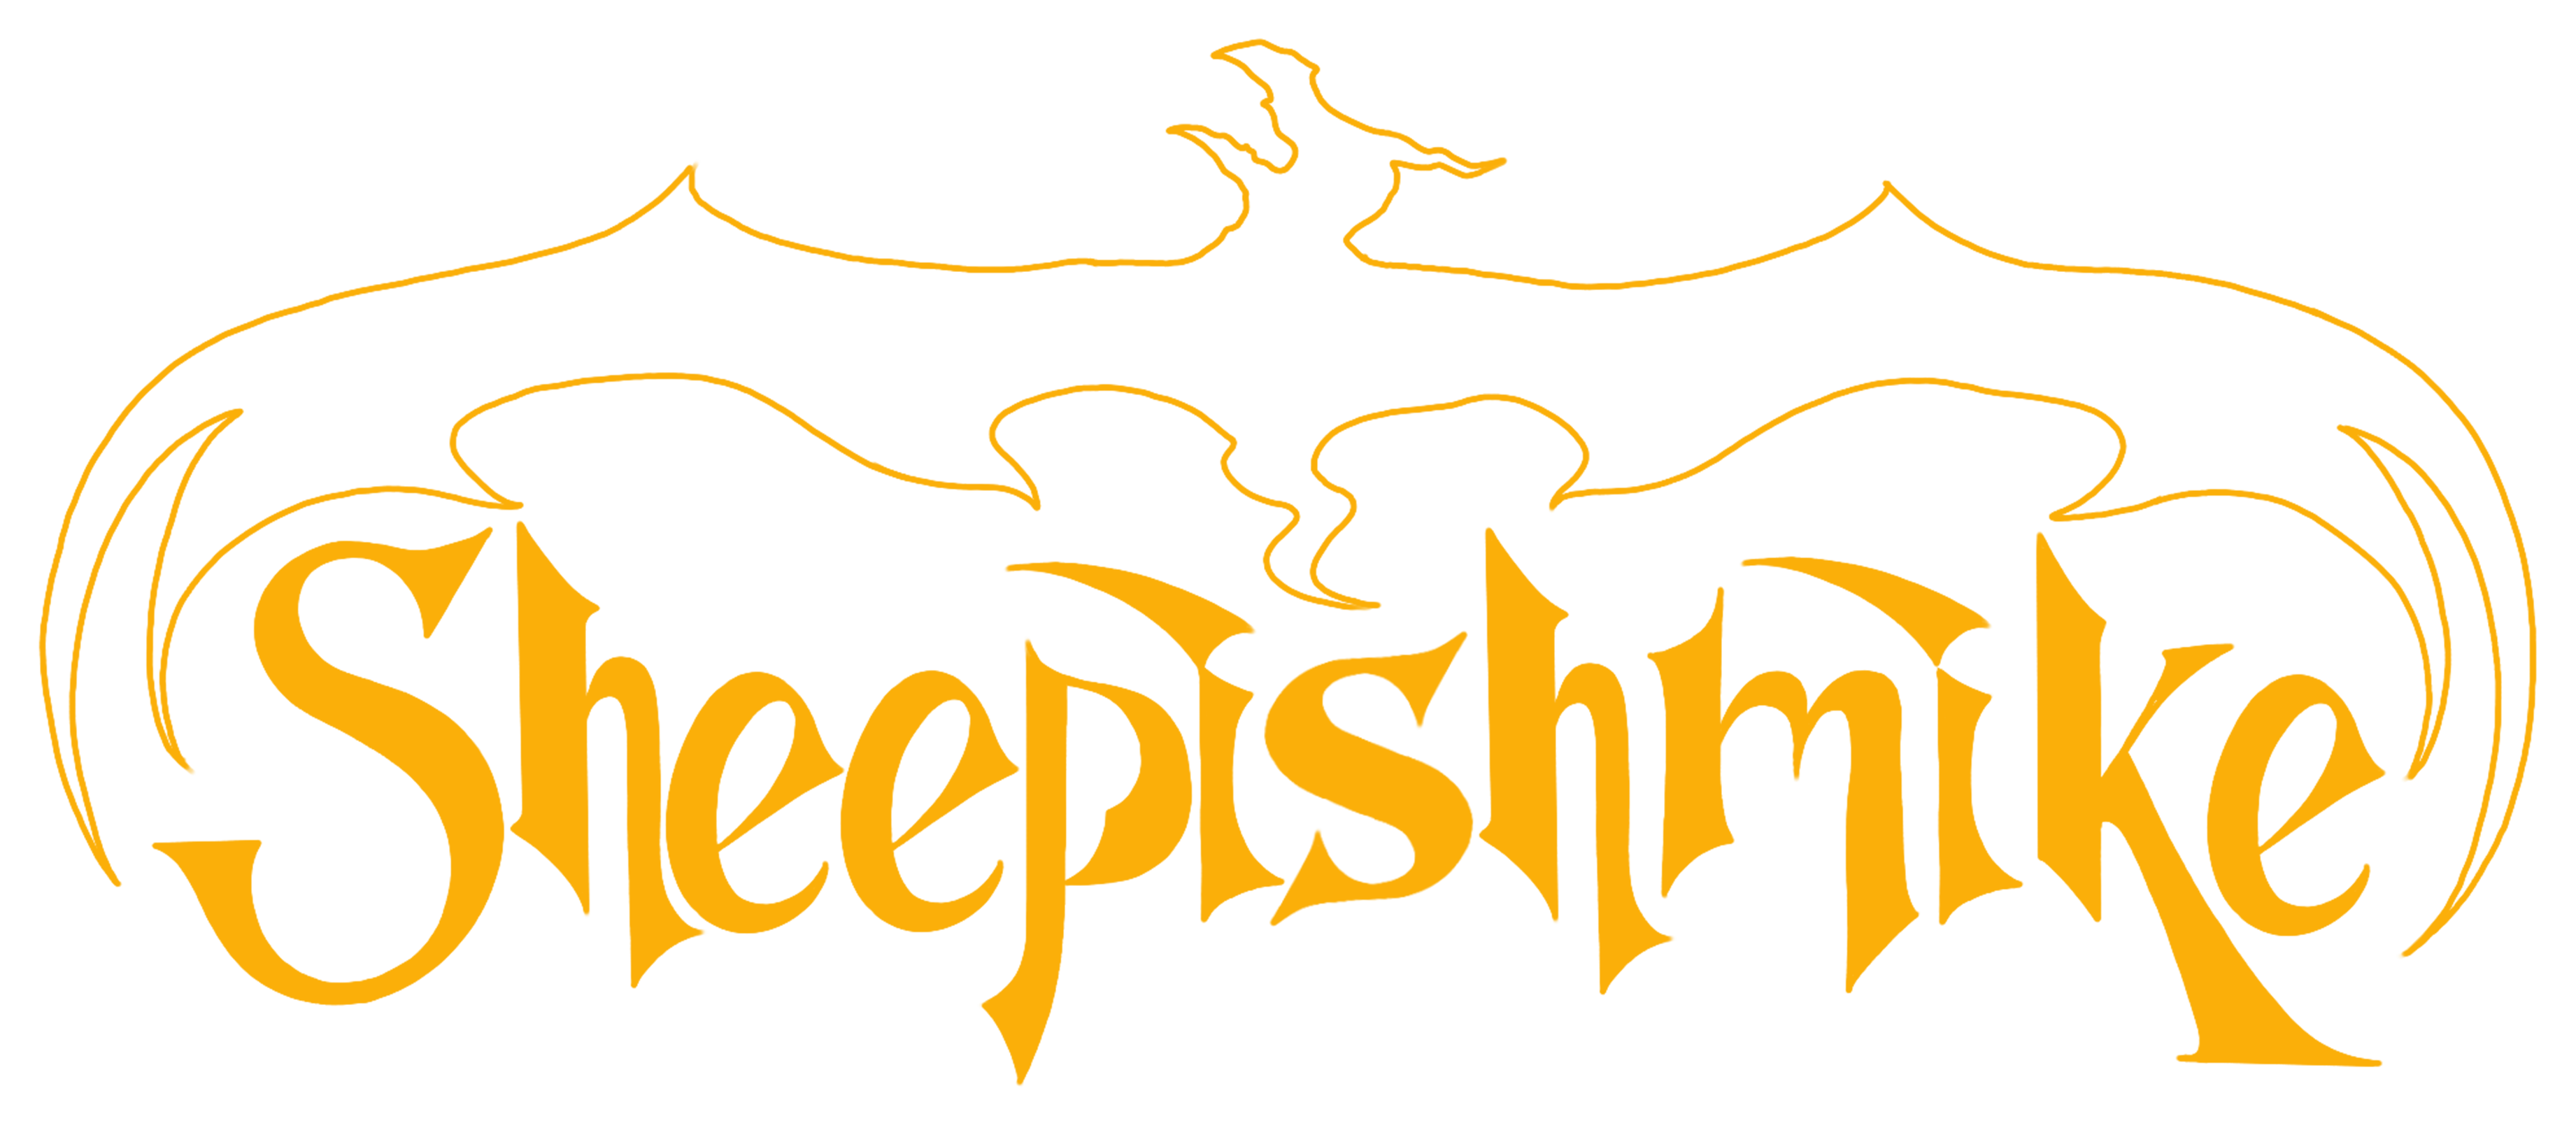 SheepishMike